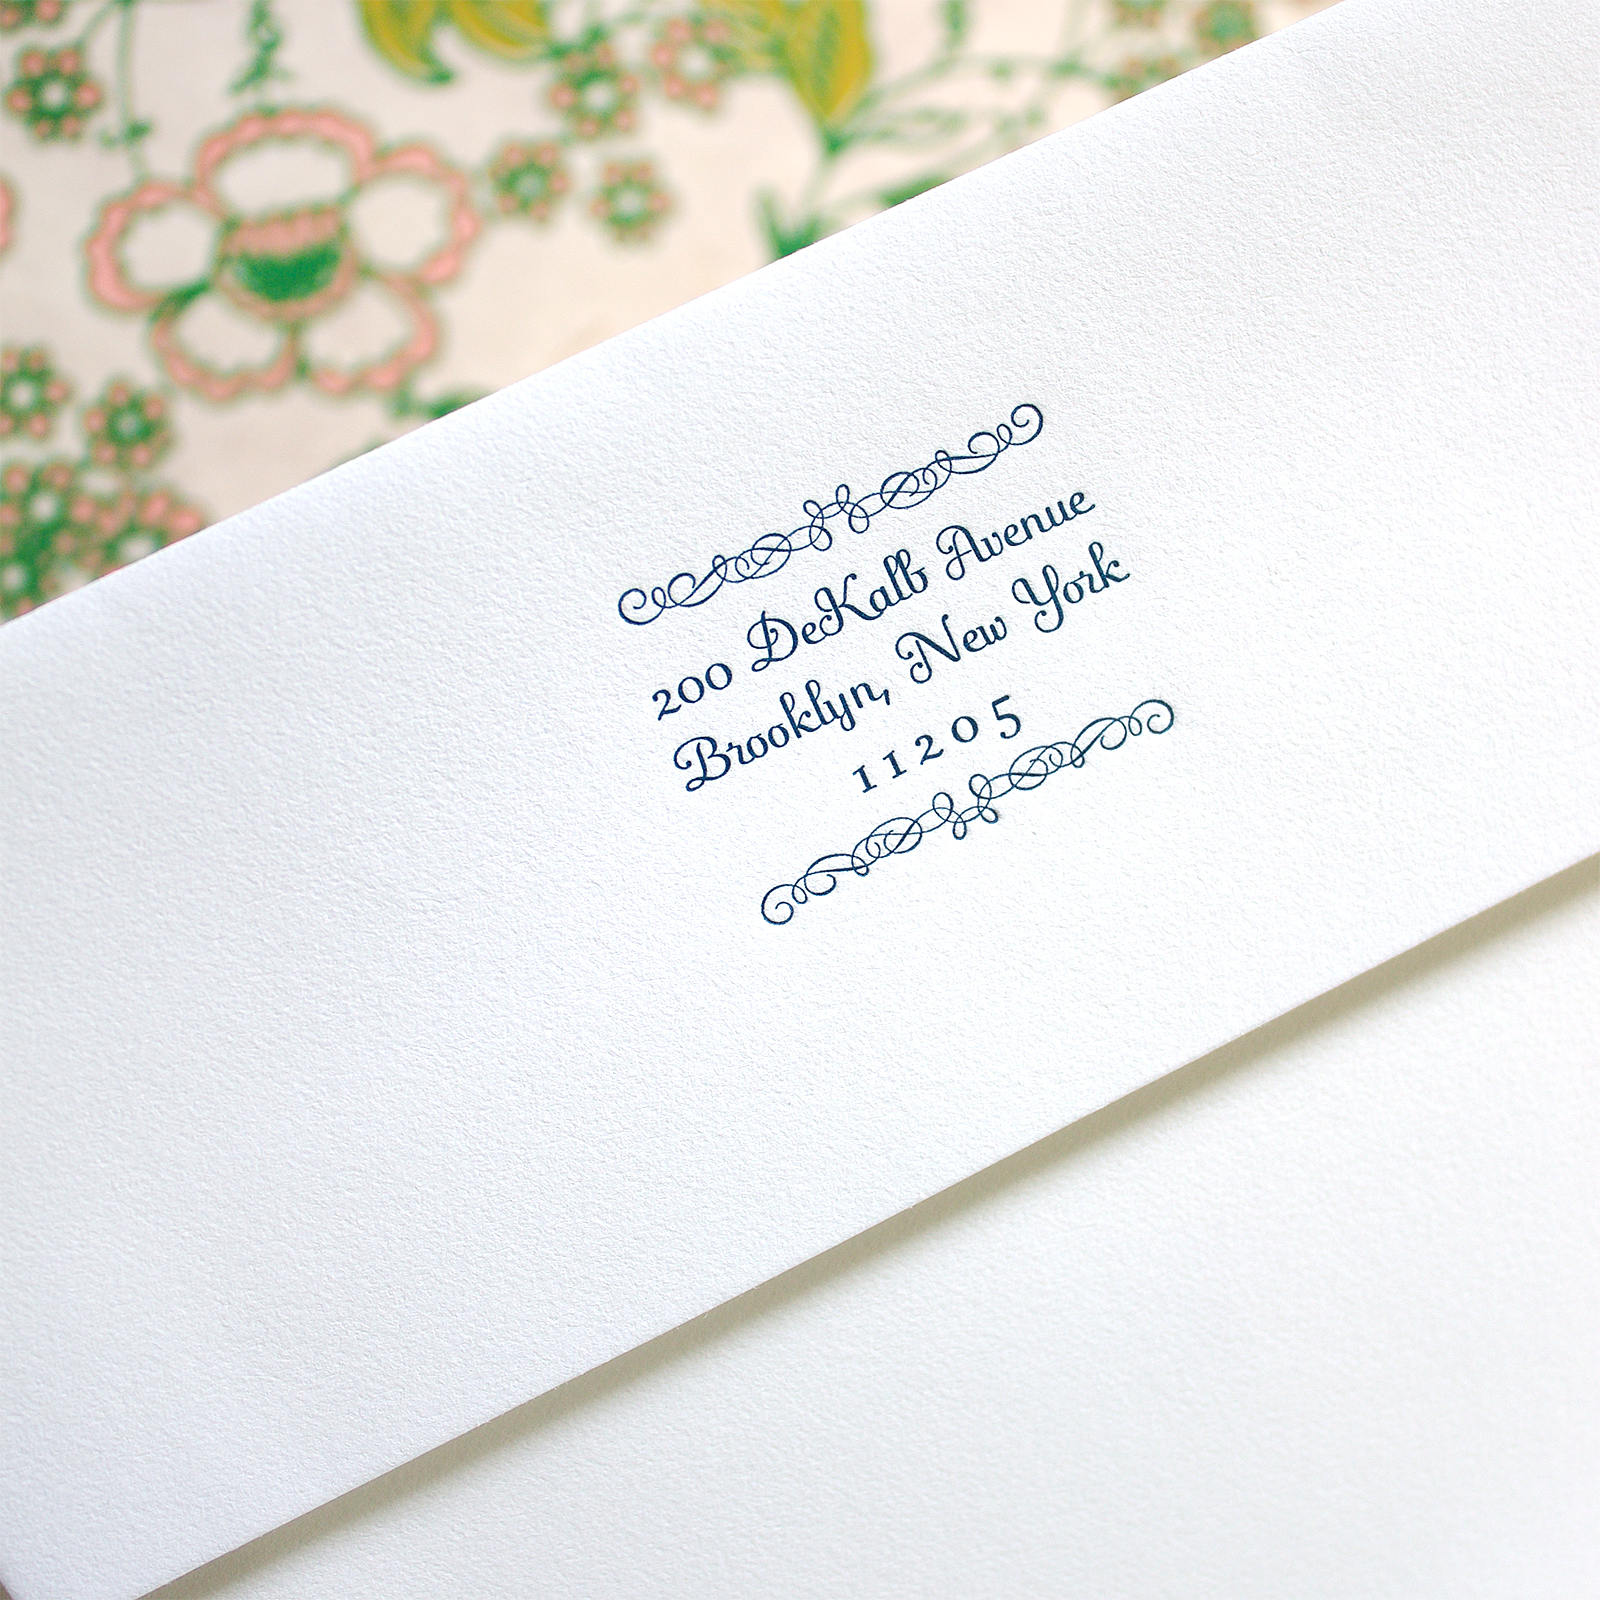 Letterpress Printed Address on Envelope